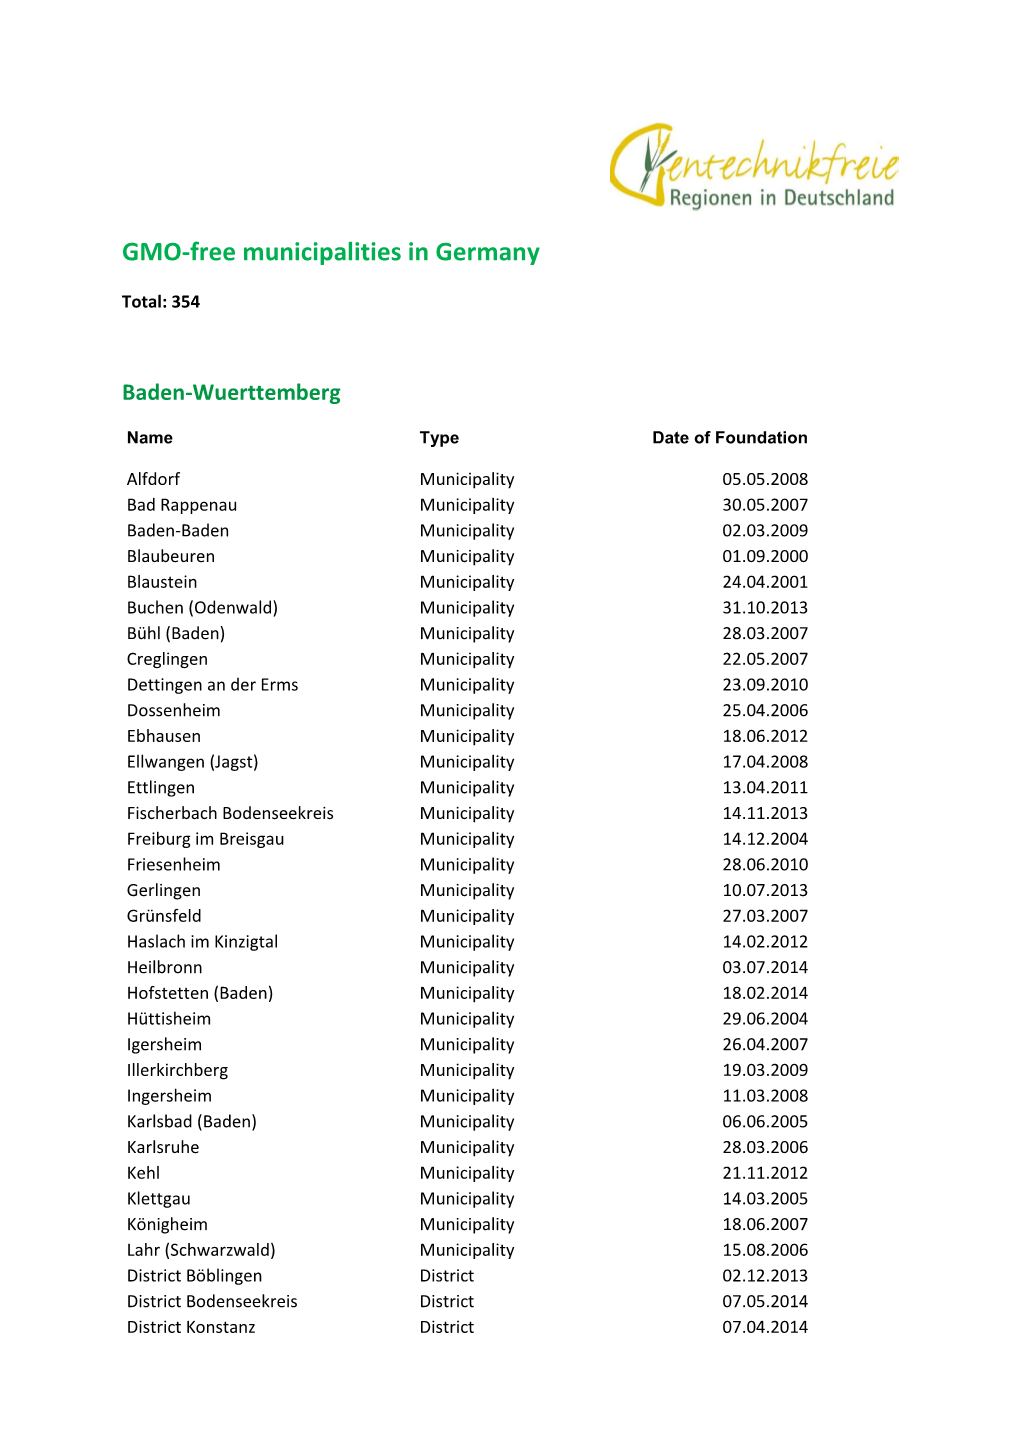 GMO-Free Municipalities in Germany (PDF)